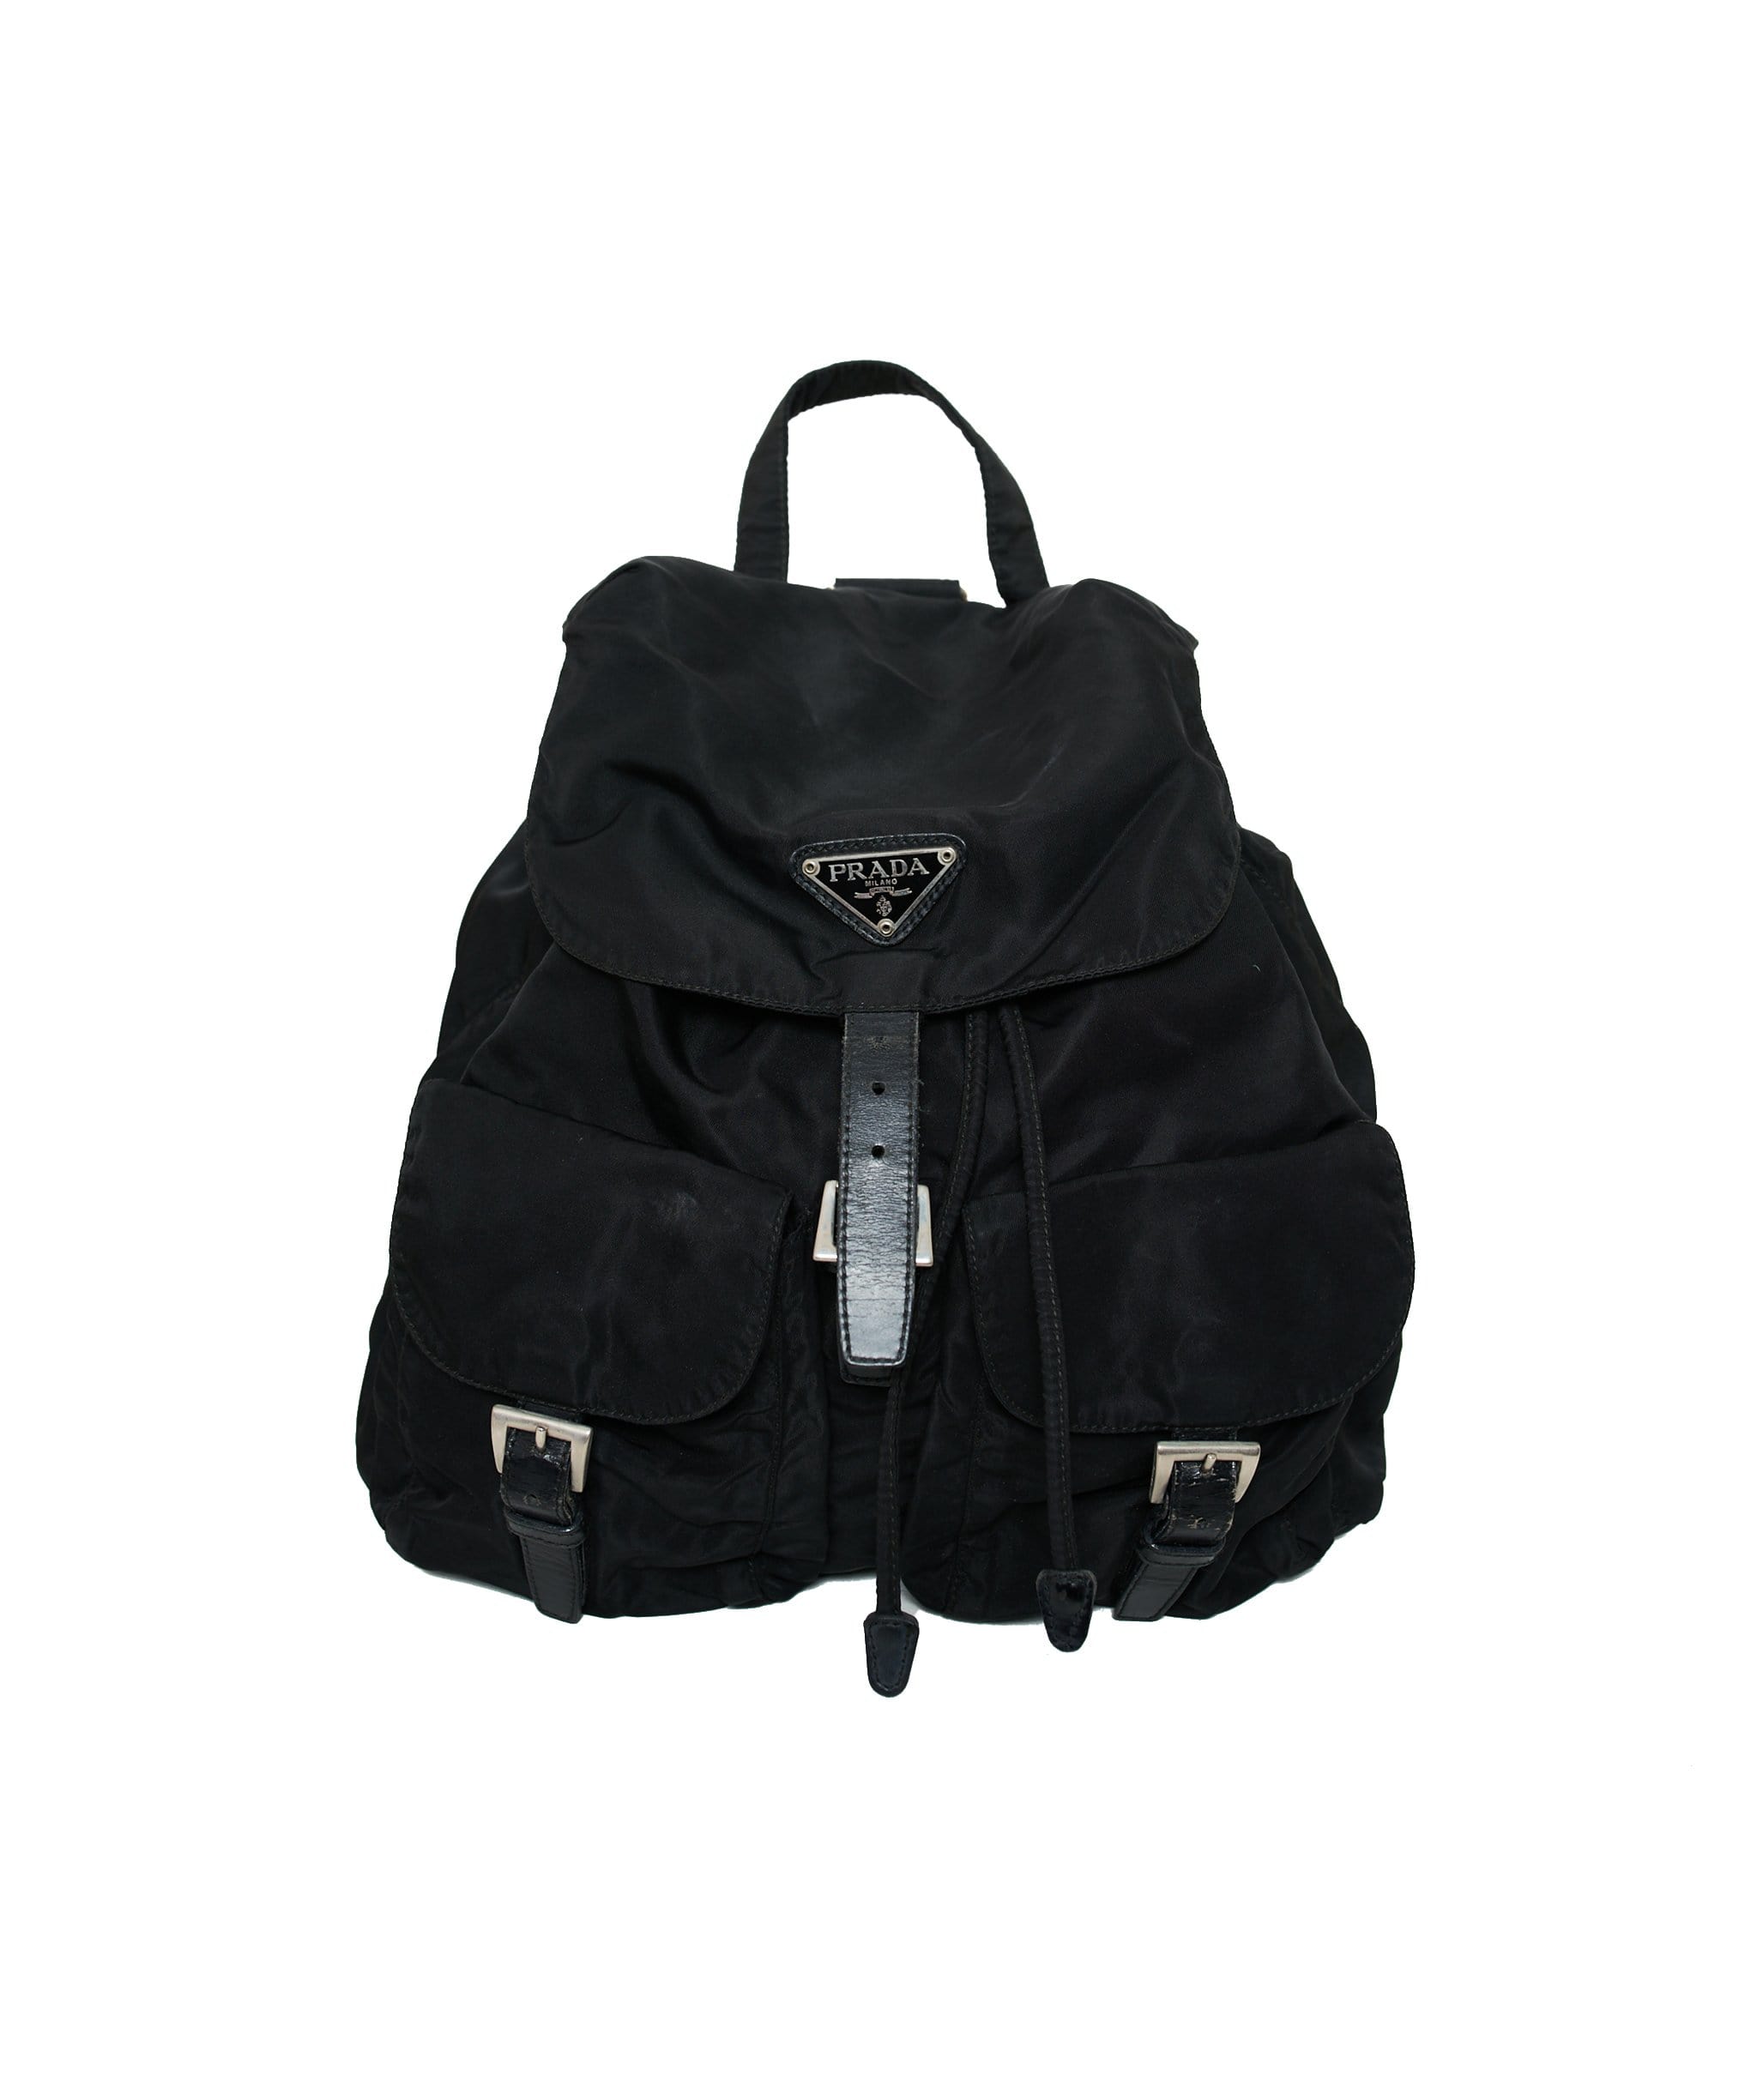 Prada Nylon backpack black